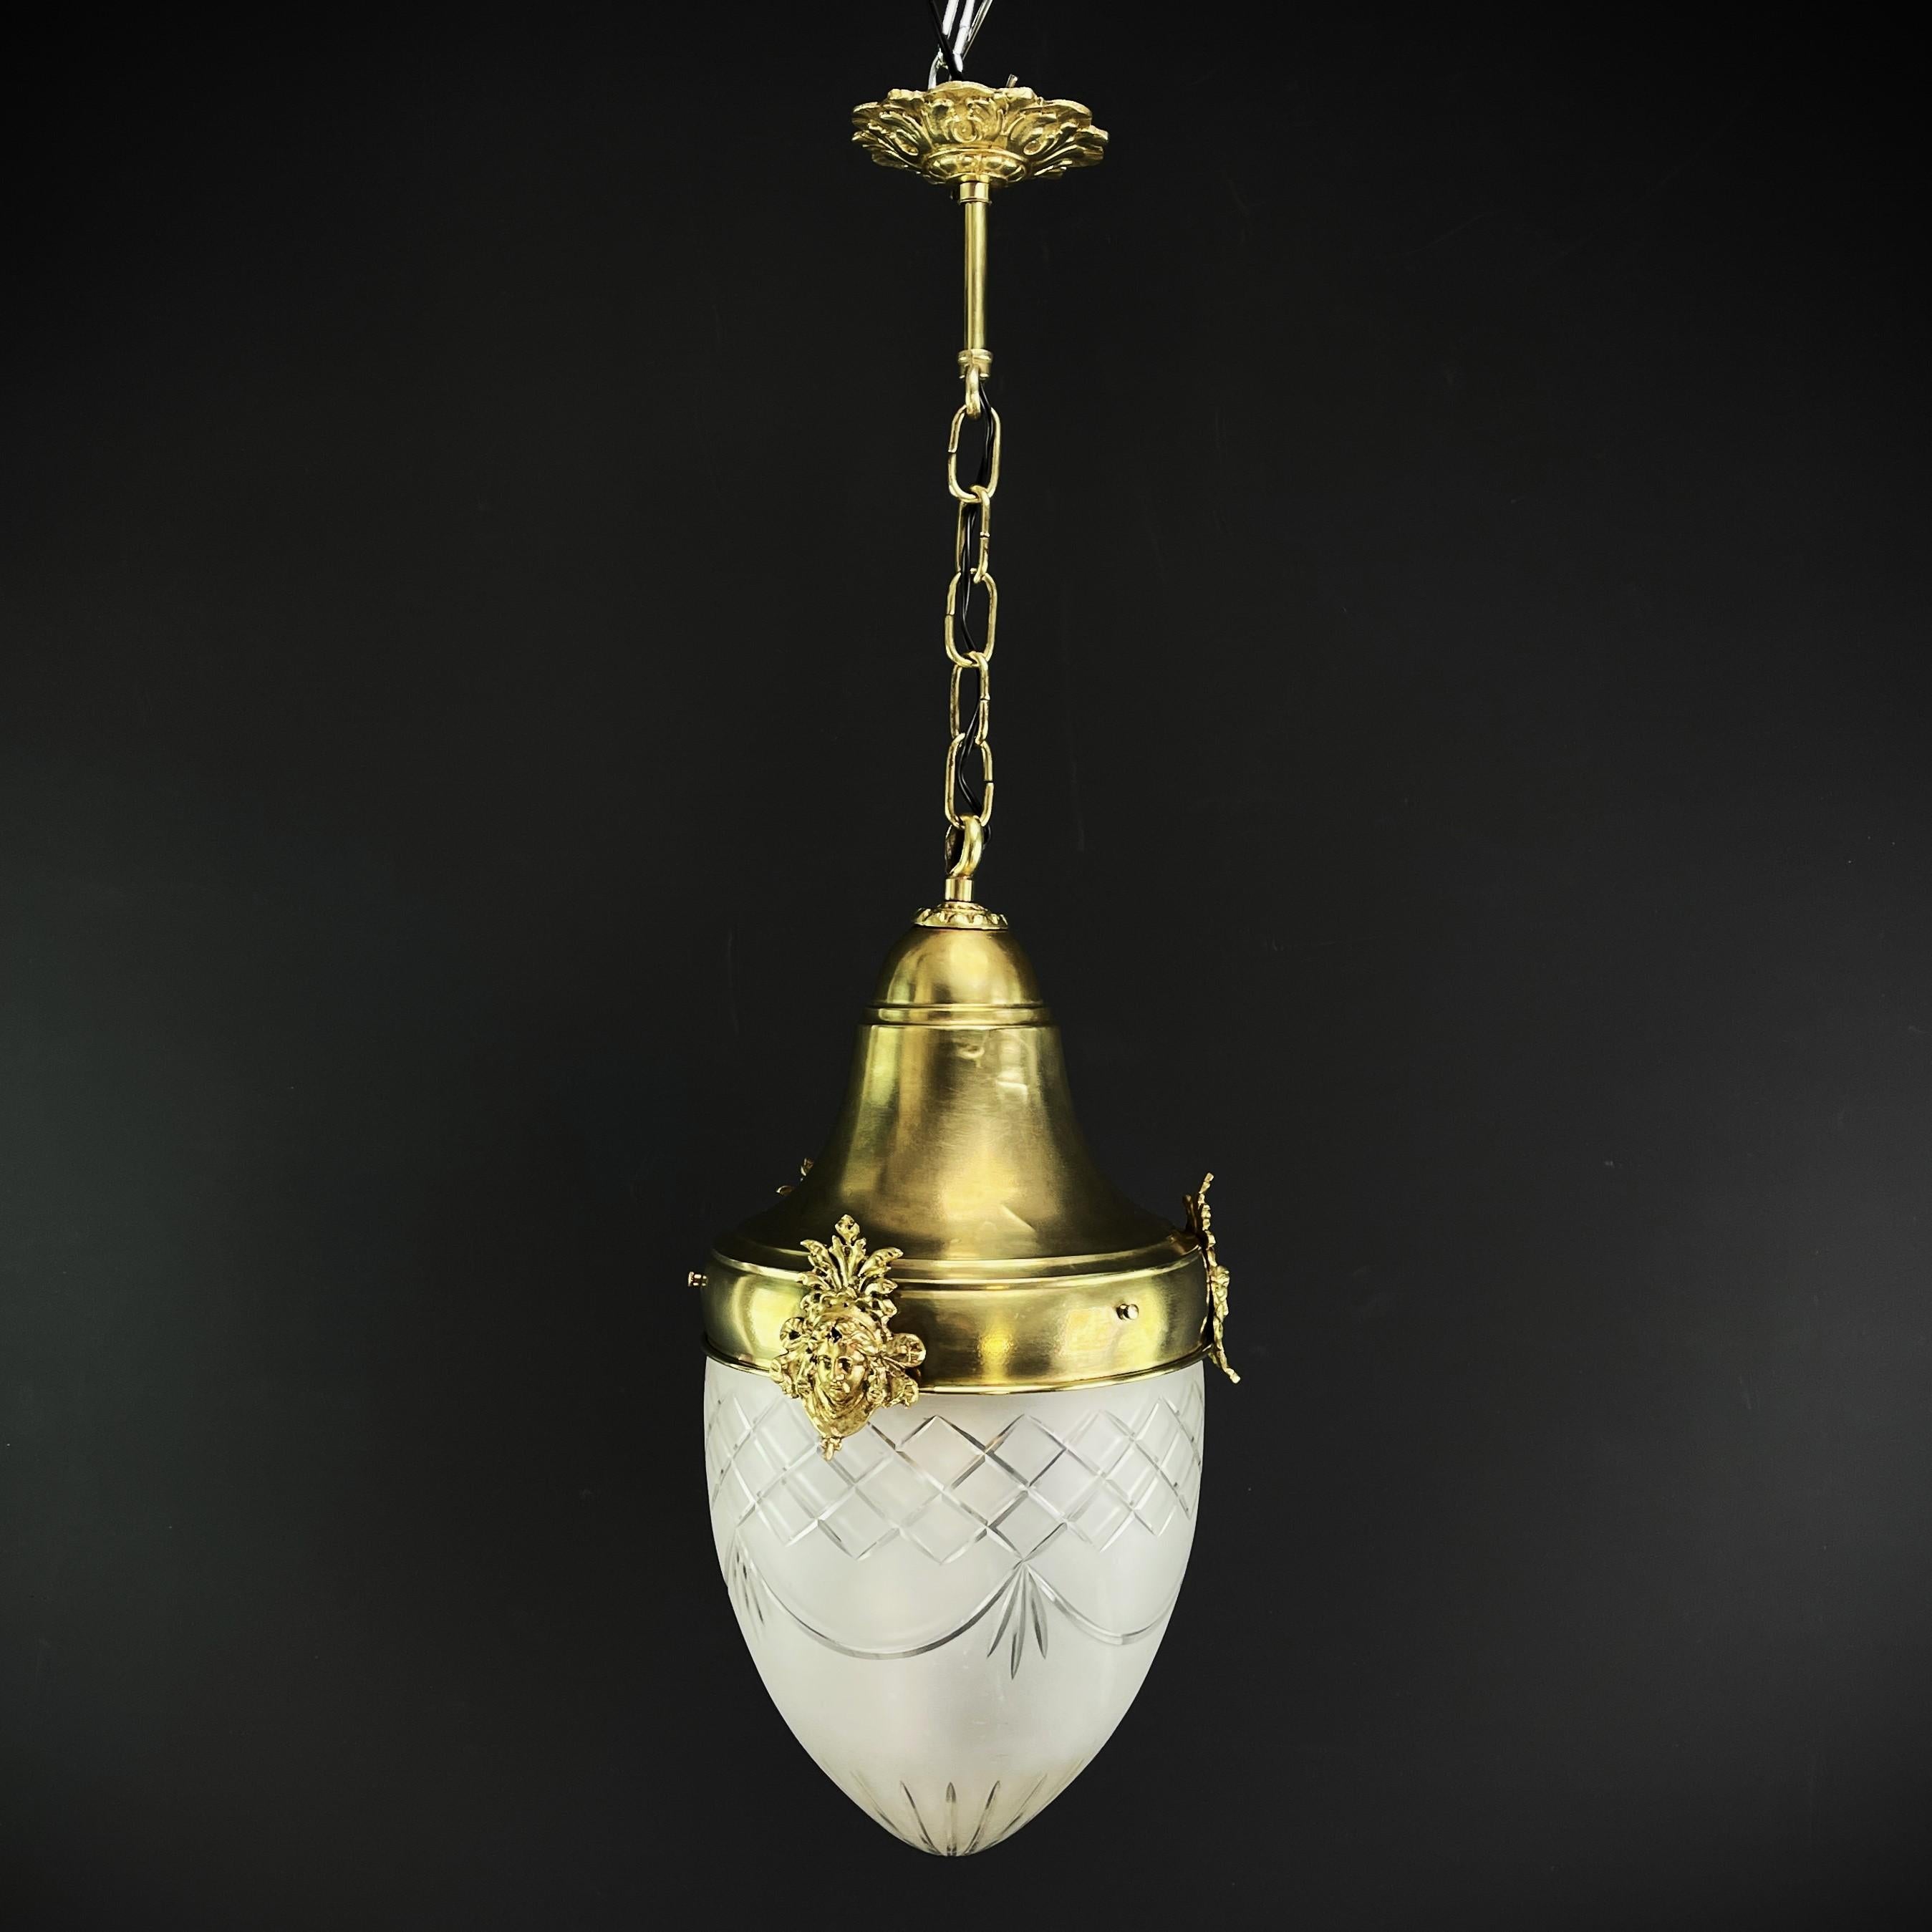 French Art Nouveau Ceiling Lamp Bronze, Hanging Lamp Teardrop Shape, 1900s For Sale